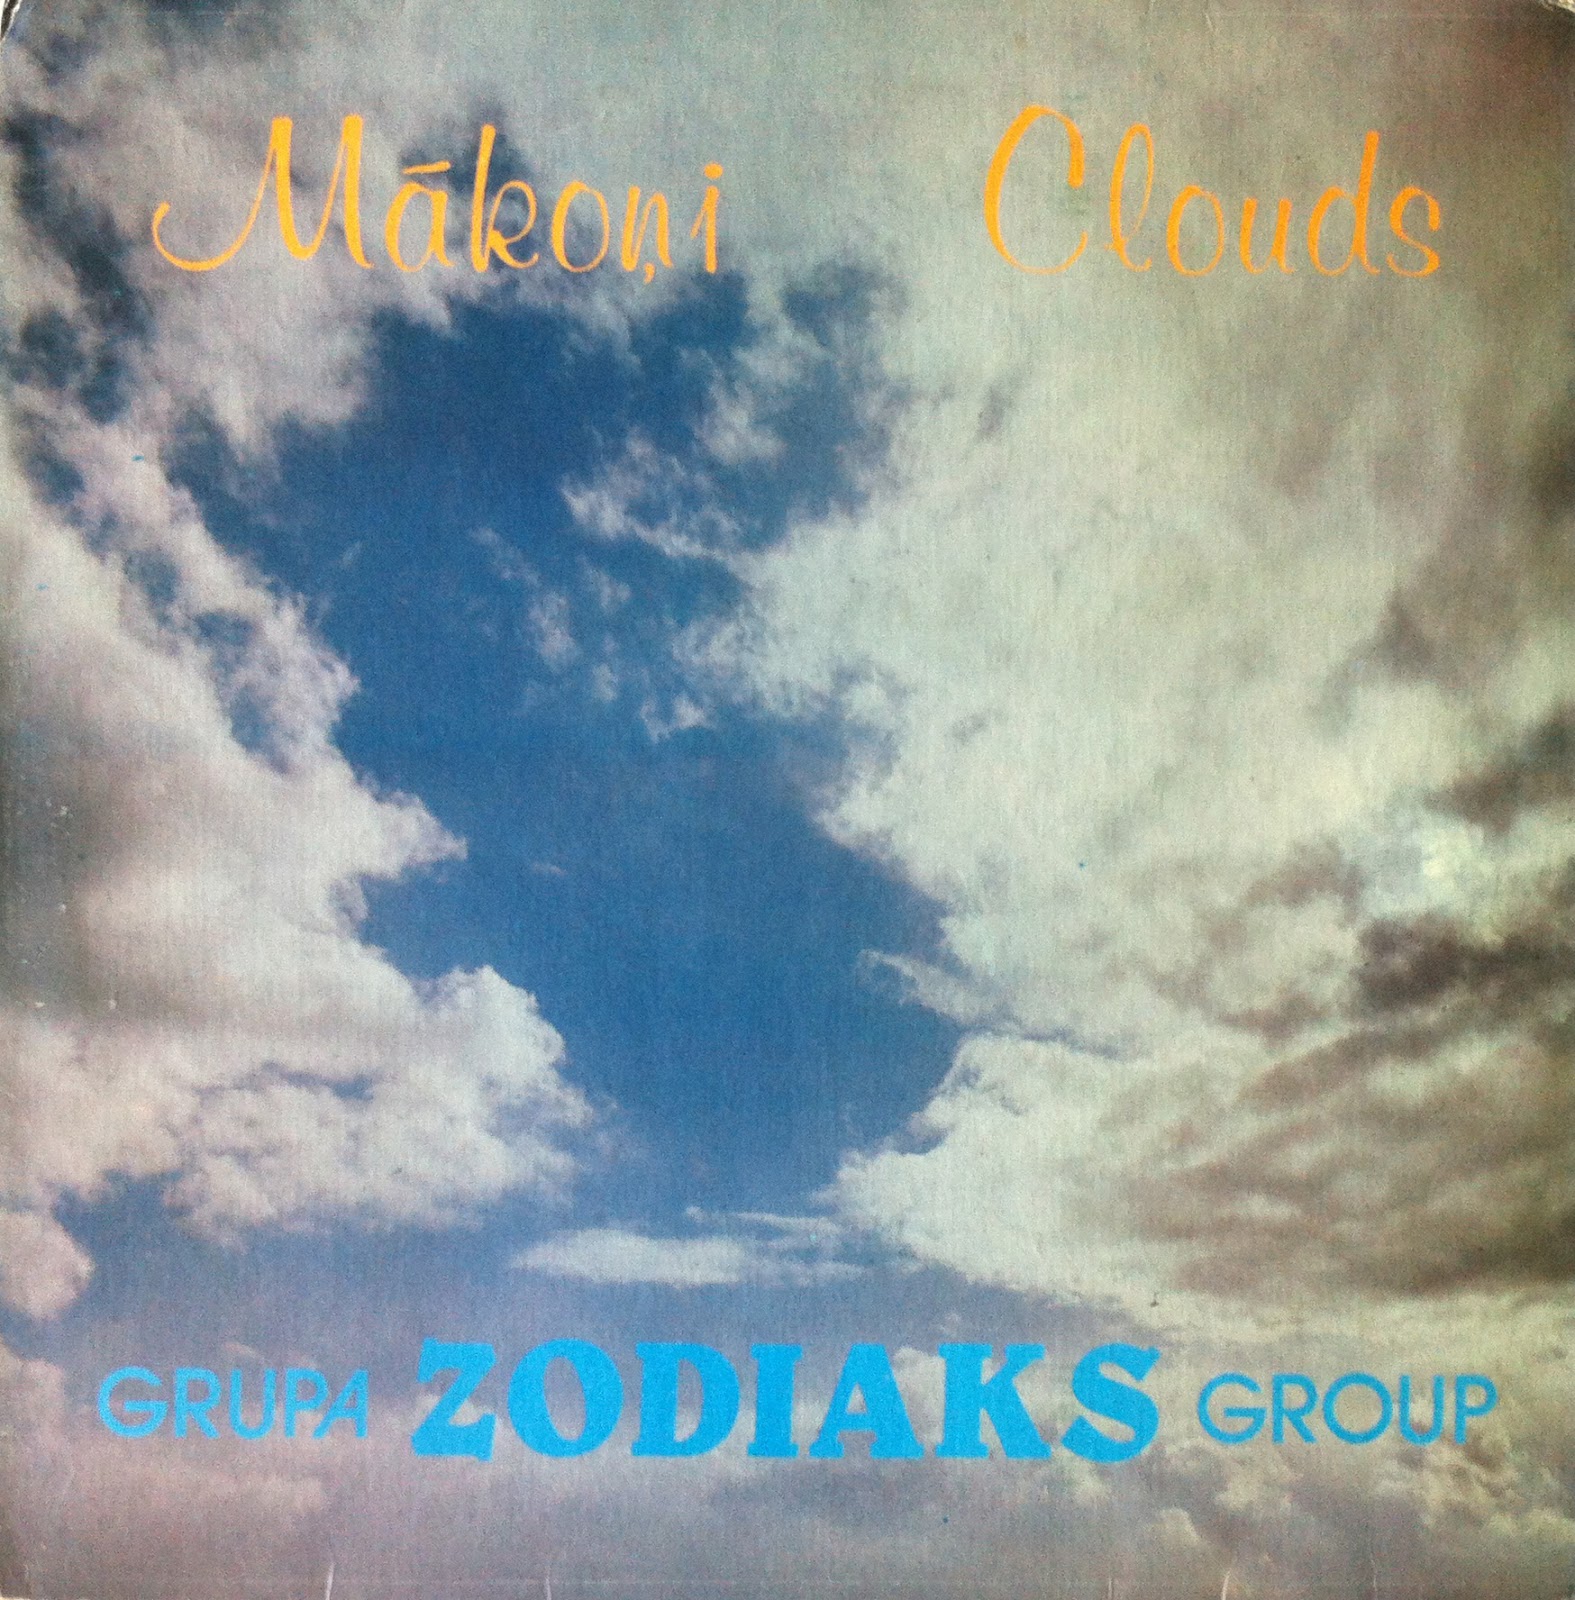 Группа «ЗОДИАК» (Grupa Zodiaks) "Mākoņi" - на латышском языке